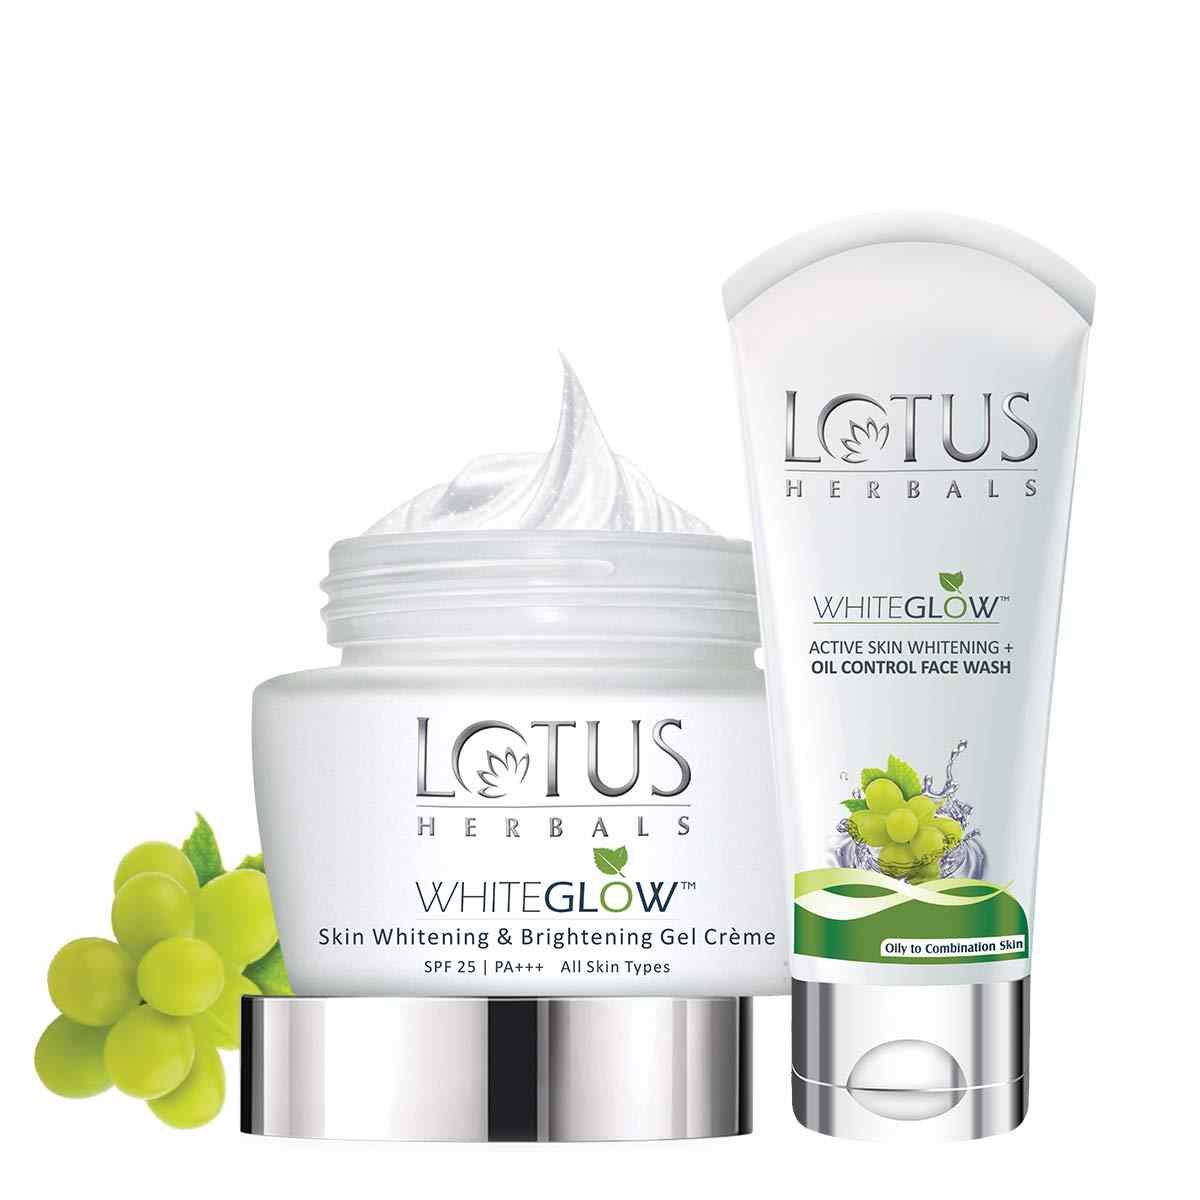 Lotus Herbals Whiteglow Skin Whitening & Brightening Gel Cream, Face creams for Summer